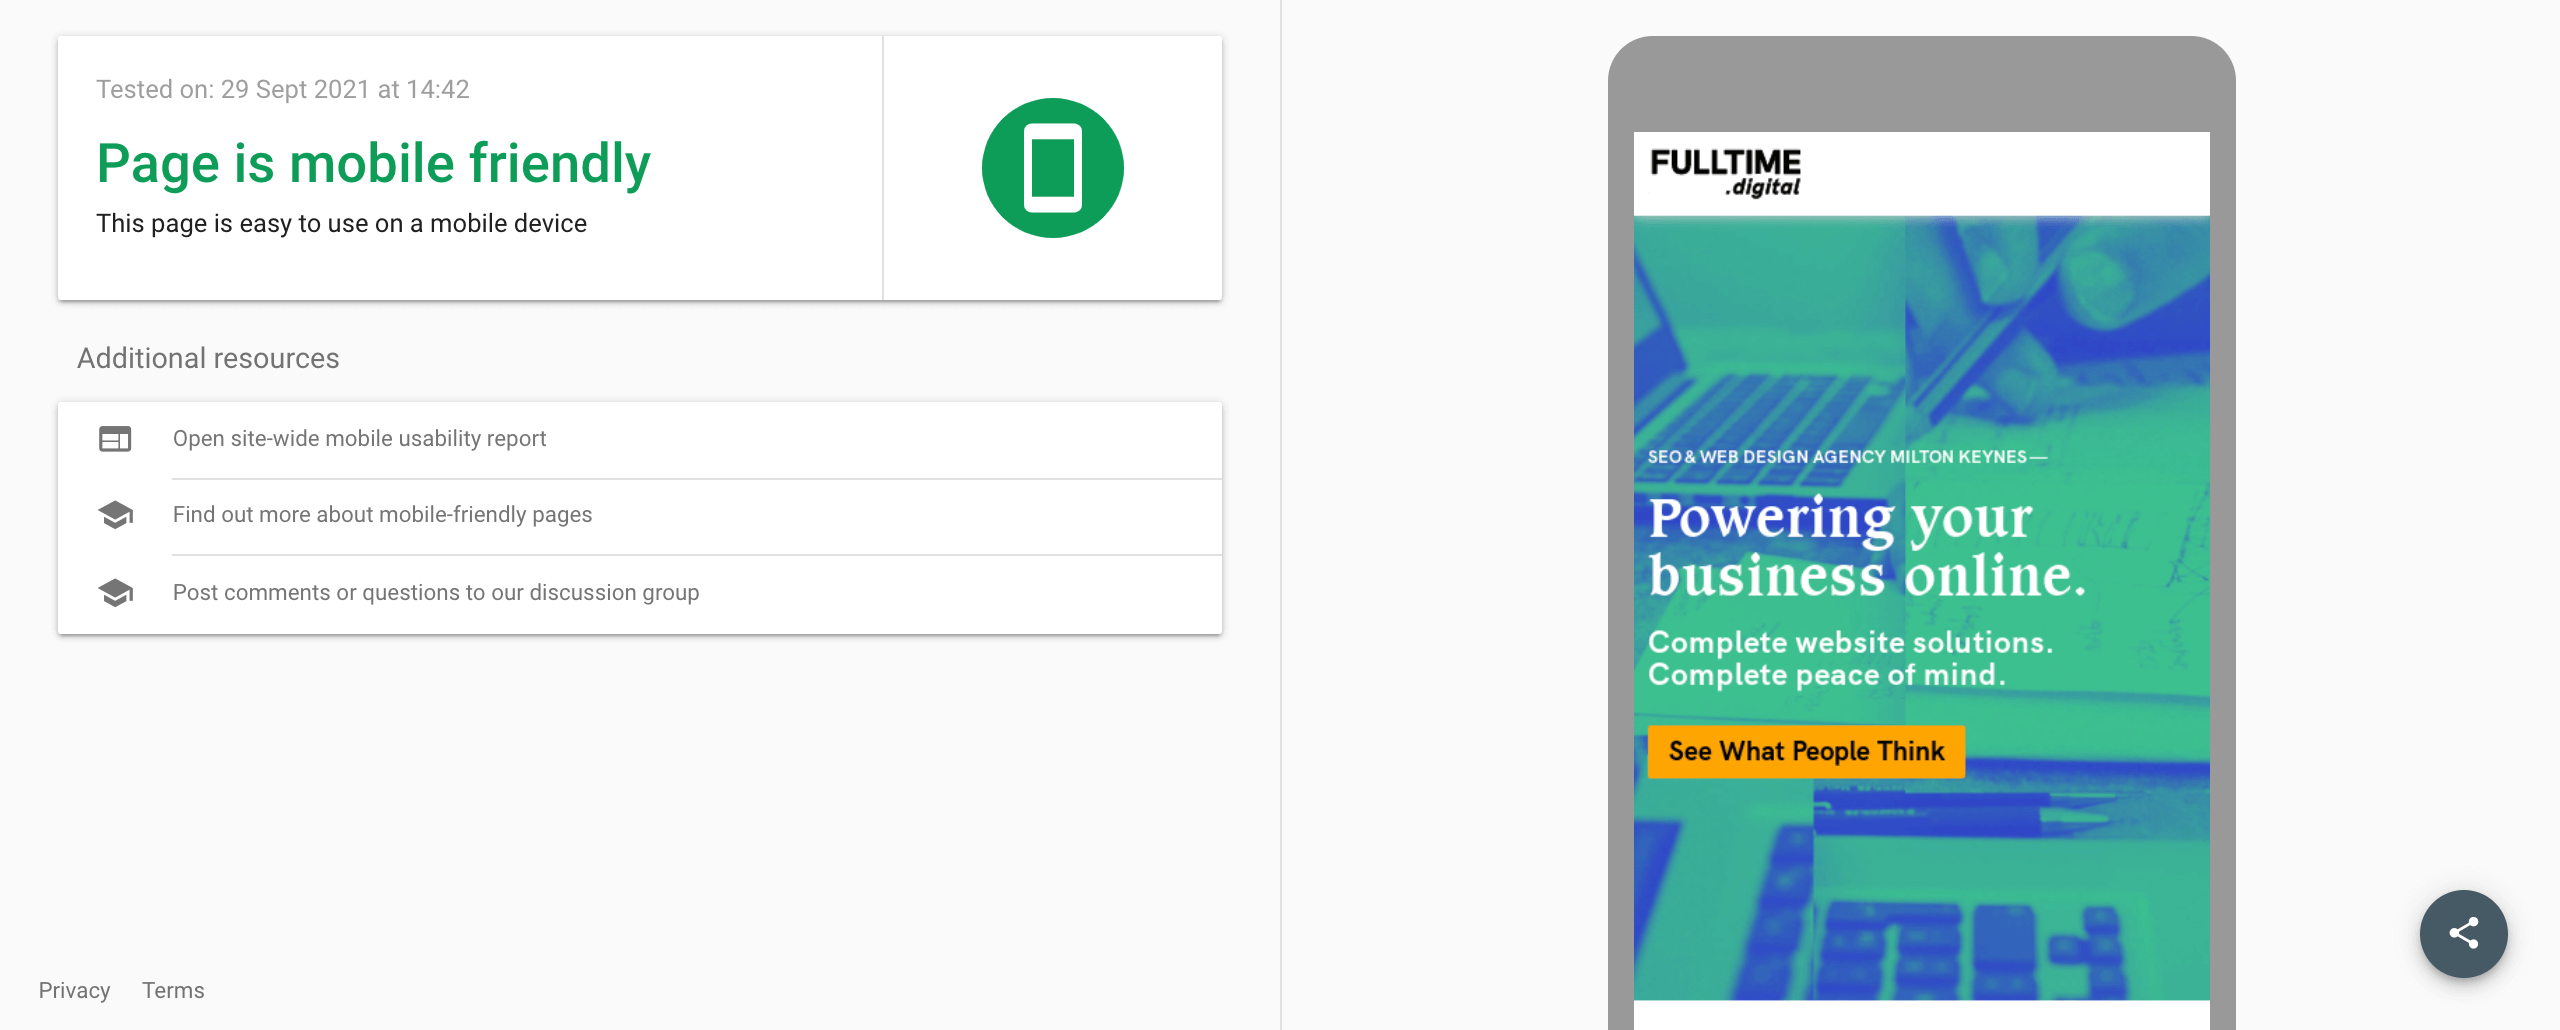 fulltime digital mobile friendly website test